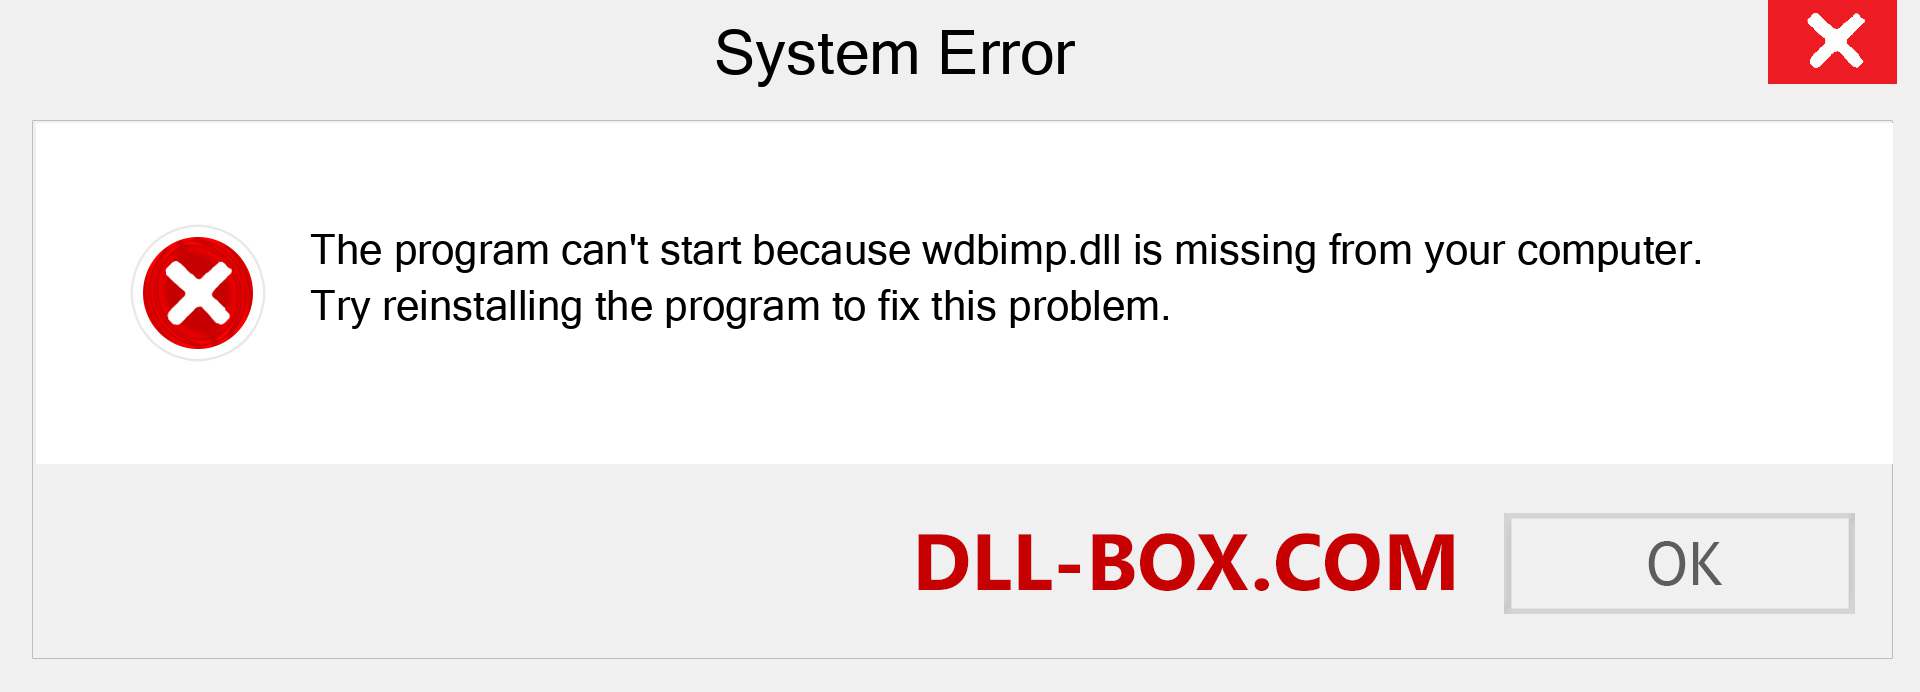  wdbimp.dll file is missing?. Download for Windows 7, 8, 10 - Fix  wdbimp dll Missing Error on Windows, photos, images